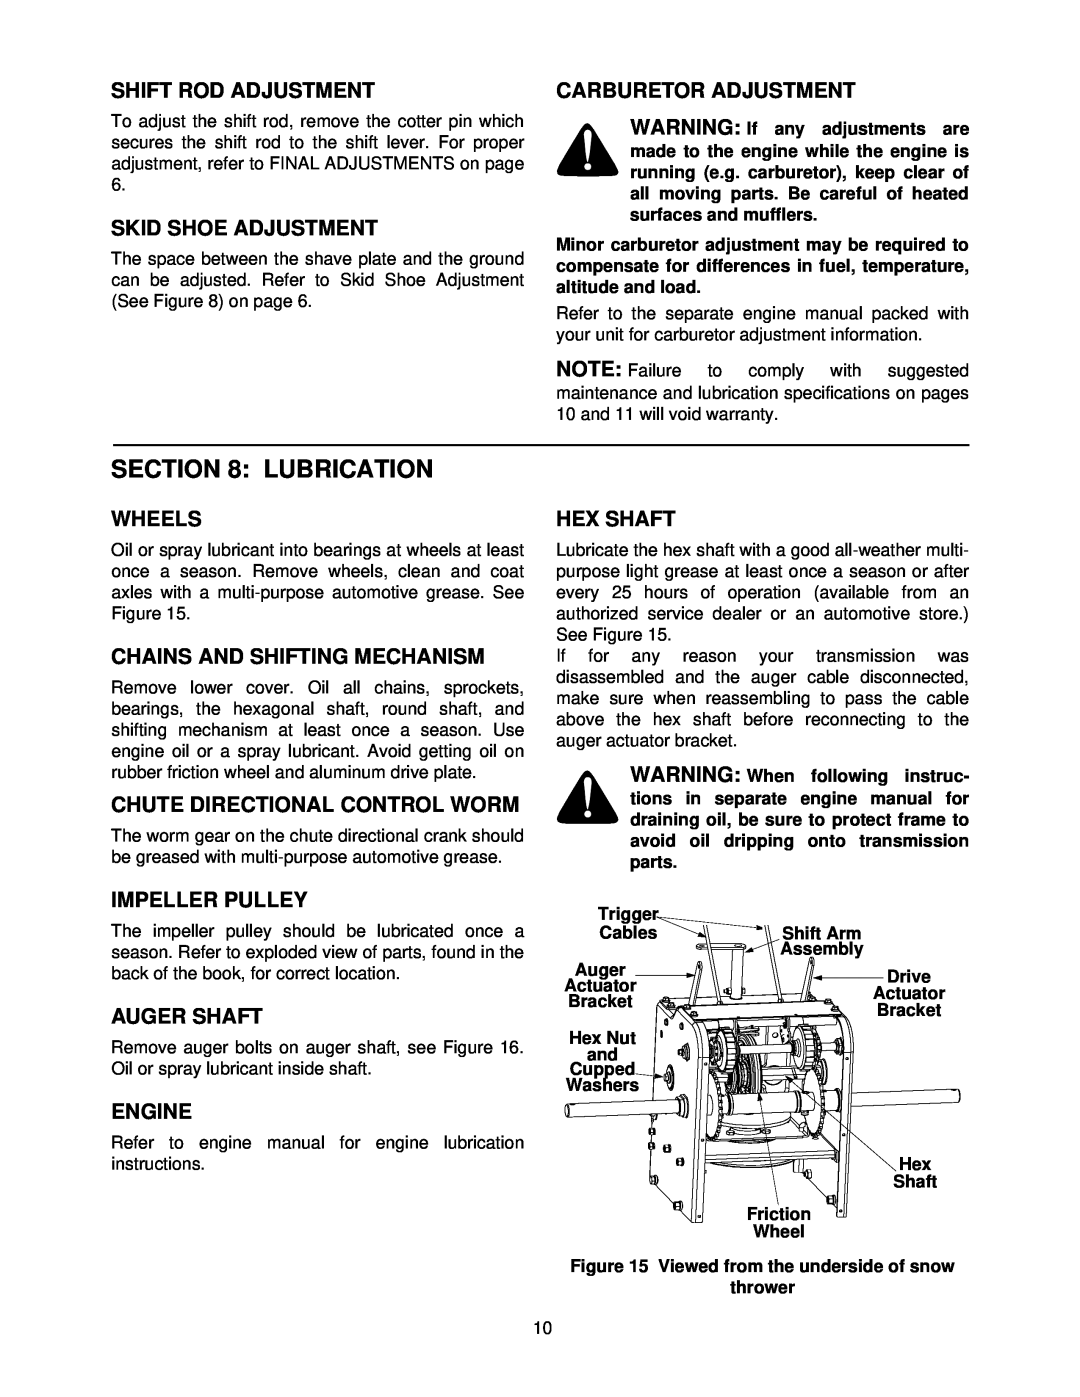 Cub Cadet 1333 SWE manual Lubrication, Shift Rod Adjustment, Skid Shoe Adjustment, Carburetor Adjustment, Wheels, Hex Shaft 